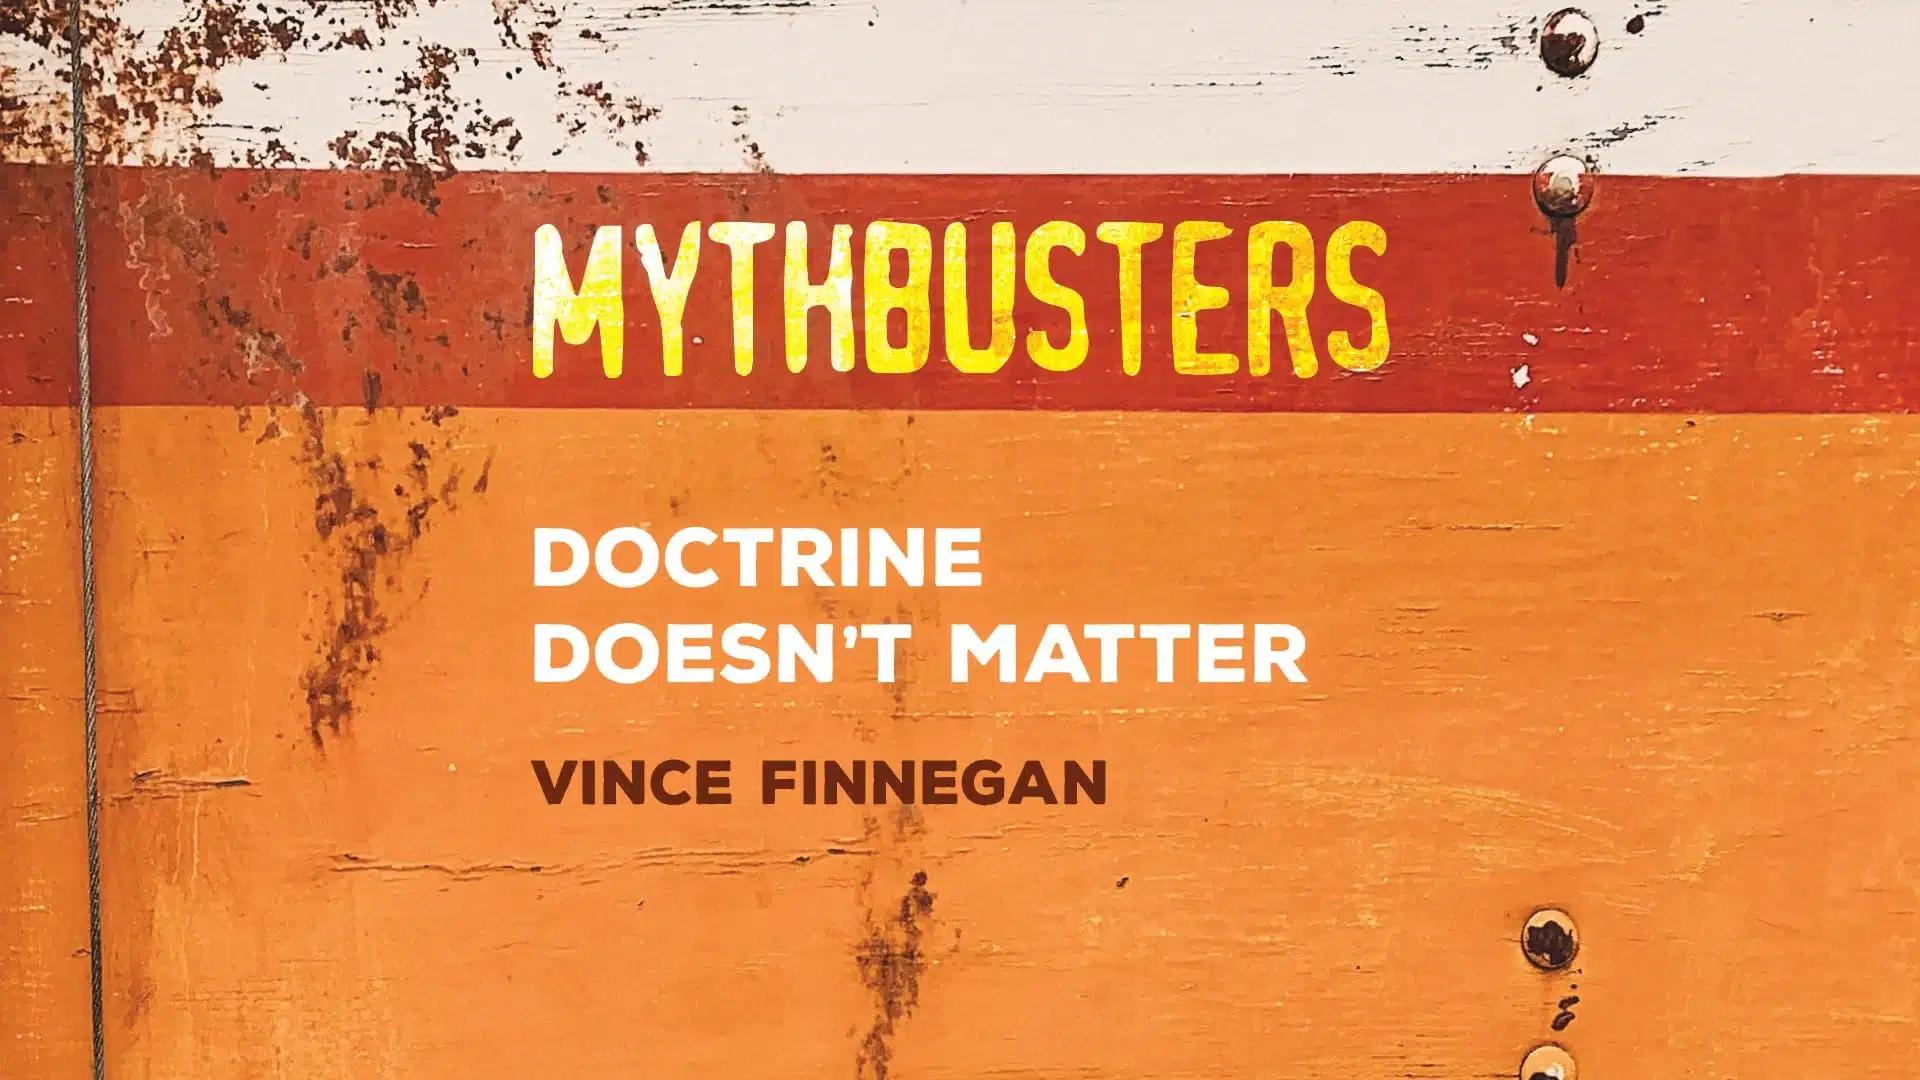 Myth: Doctrine Doesn’t Matter